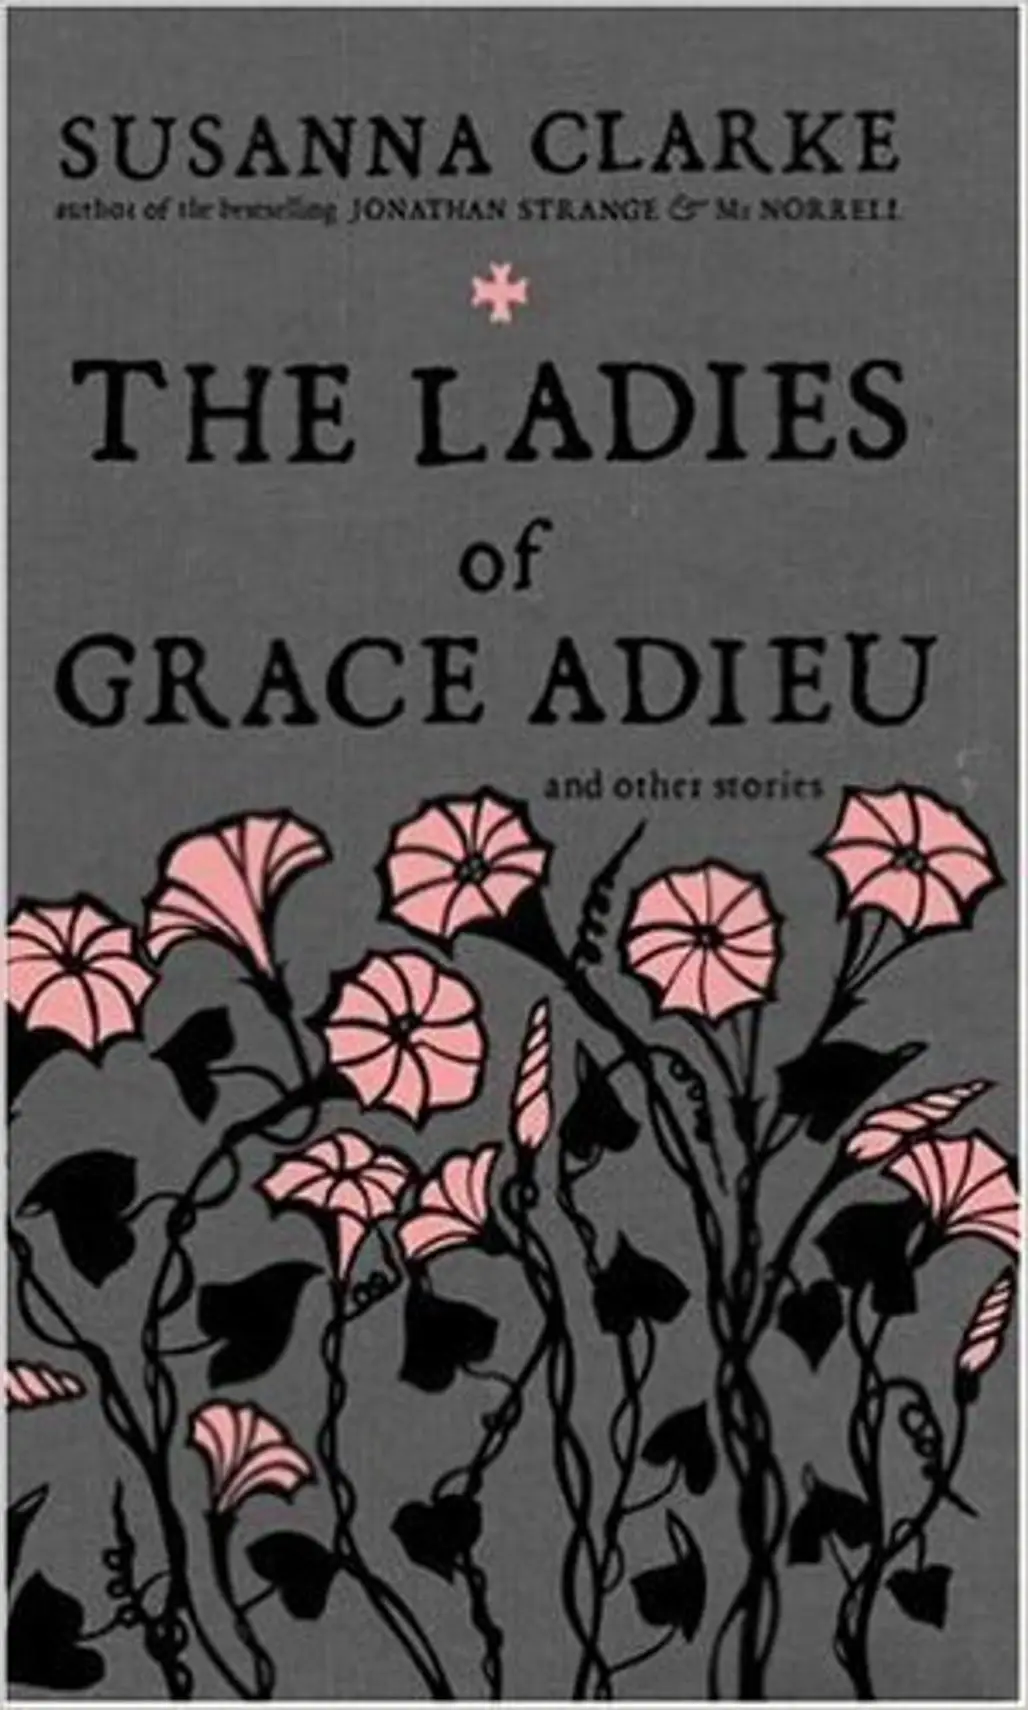 The Ladies of Grace Adieu (Susannah Clarke)